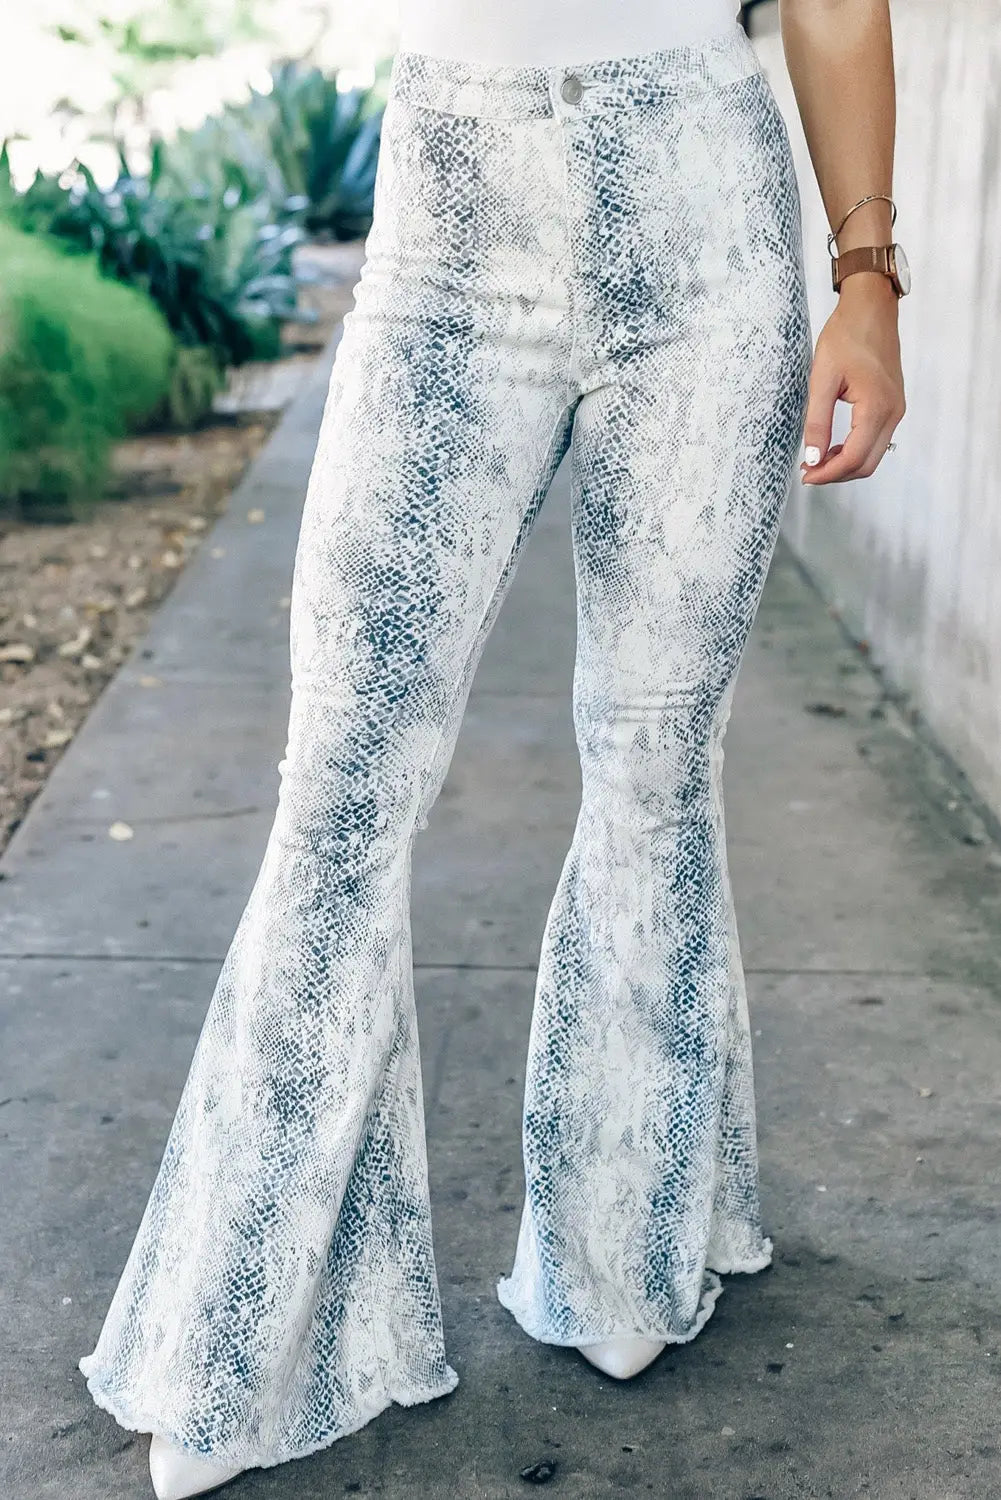 White western fashion high waist snakeskin print flare pants - l / 98% cotton + 2% elastane - wide leg